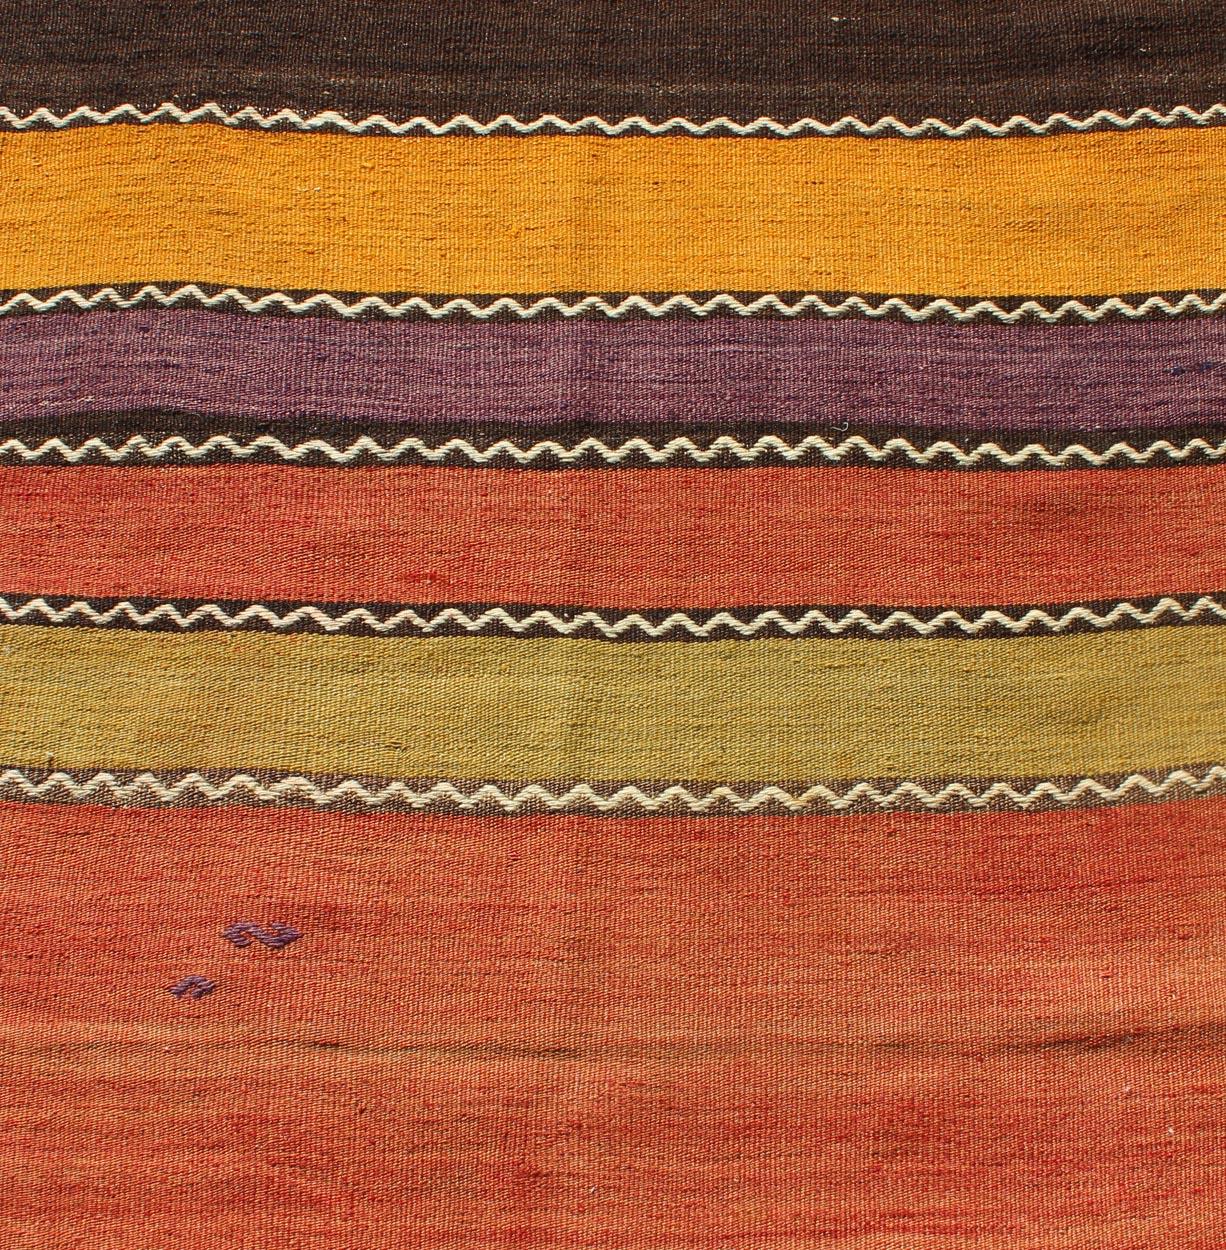 Wool Vintage Kilim Runner with Horizontal Stripes in Orange, Green, Purple, Red, Gold